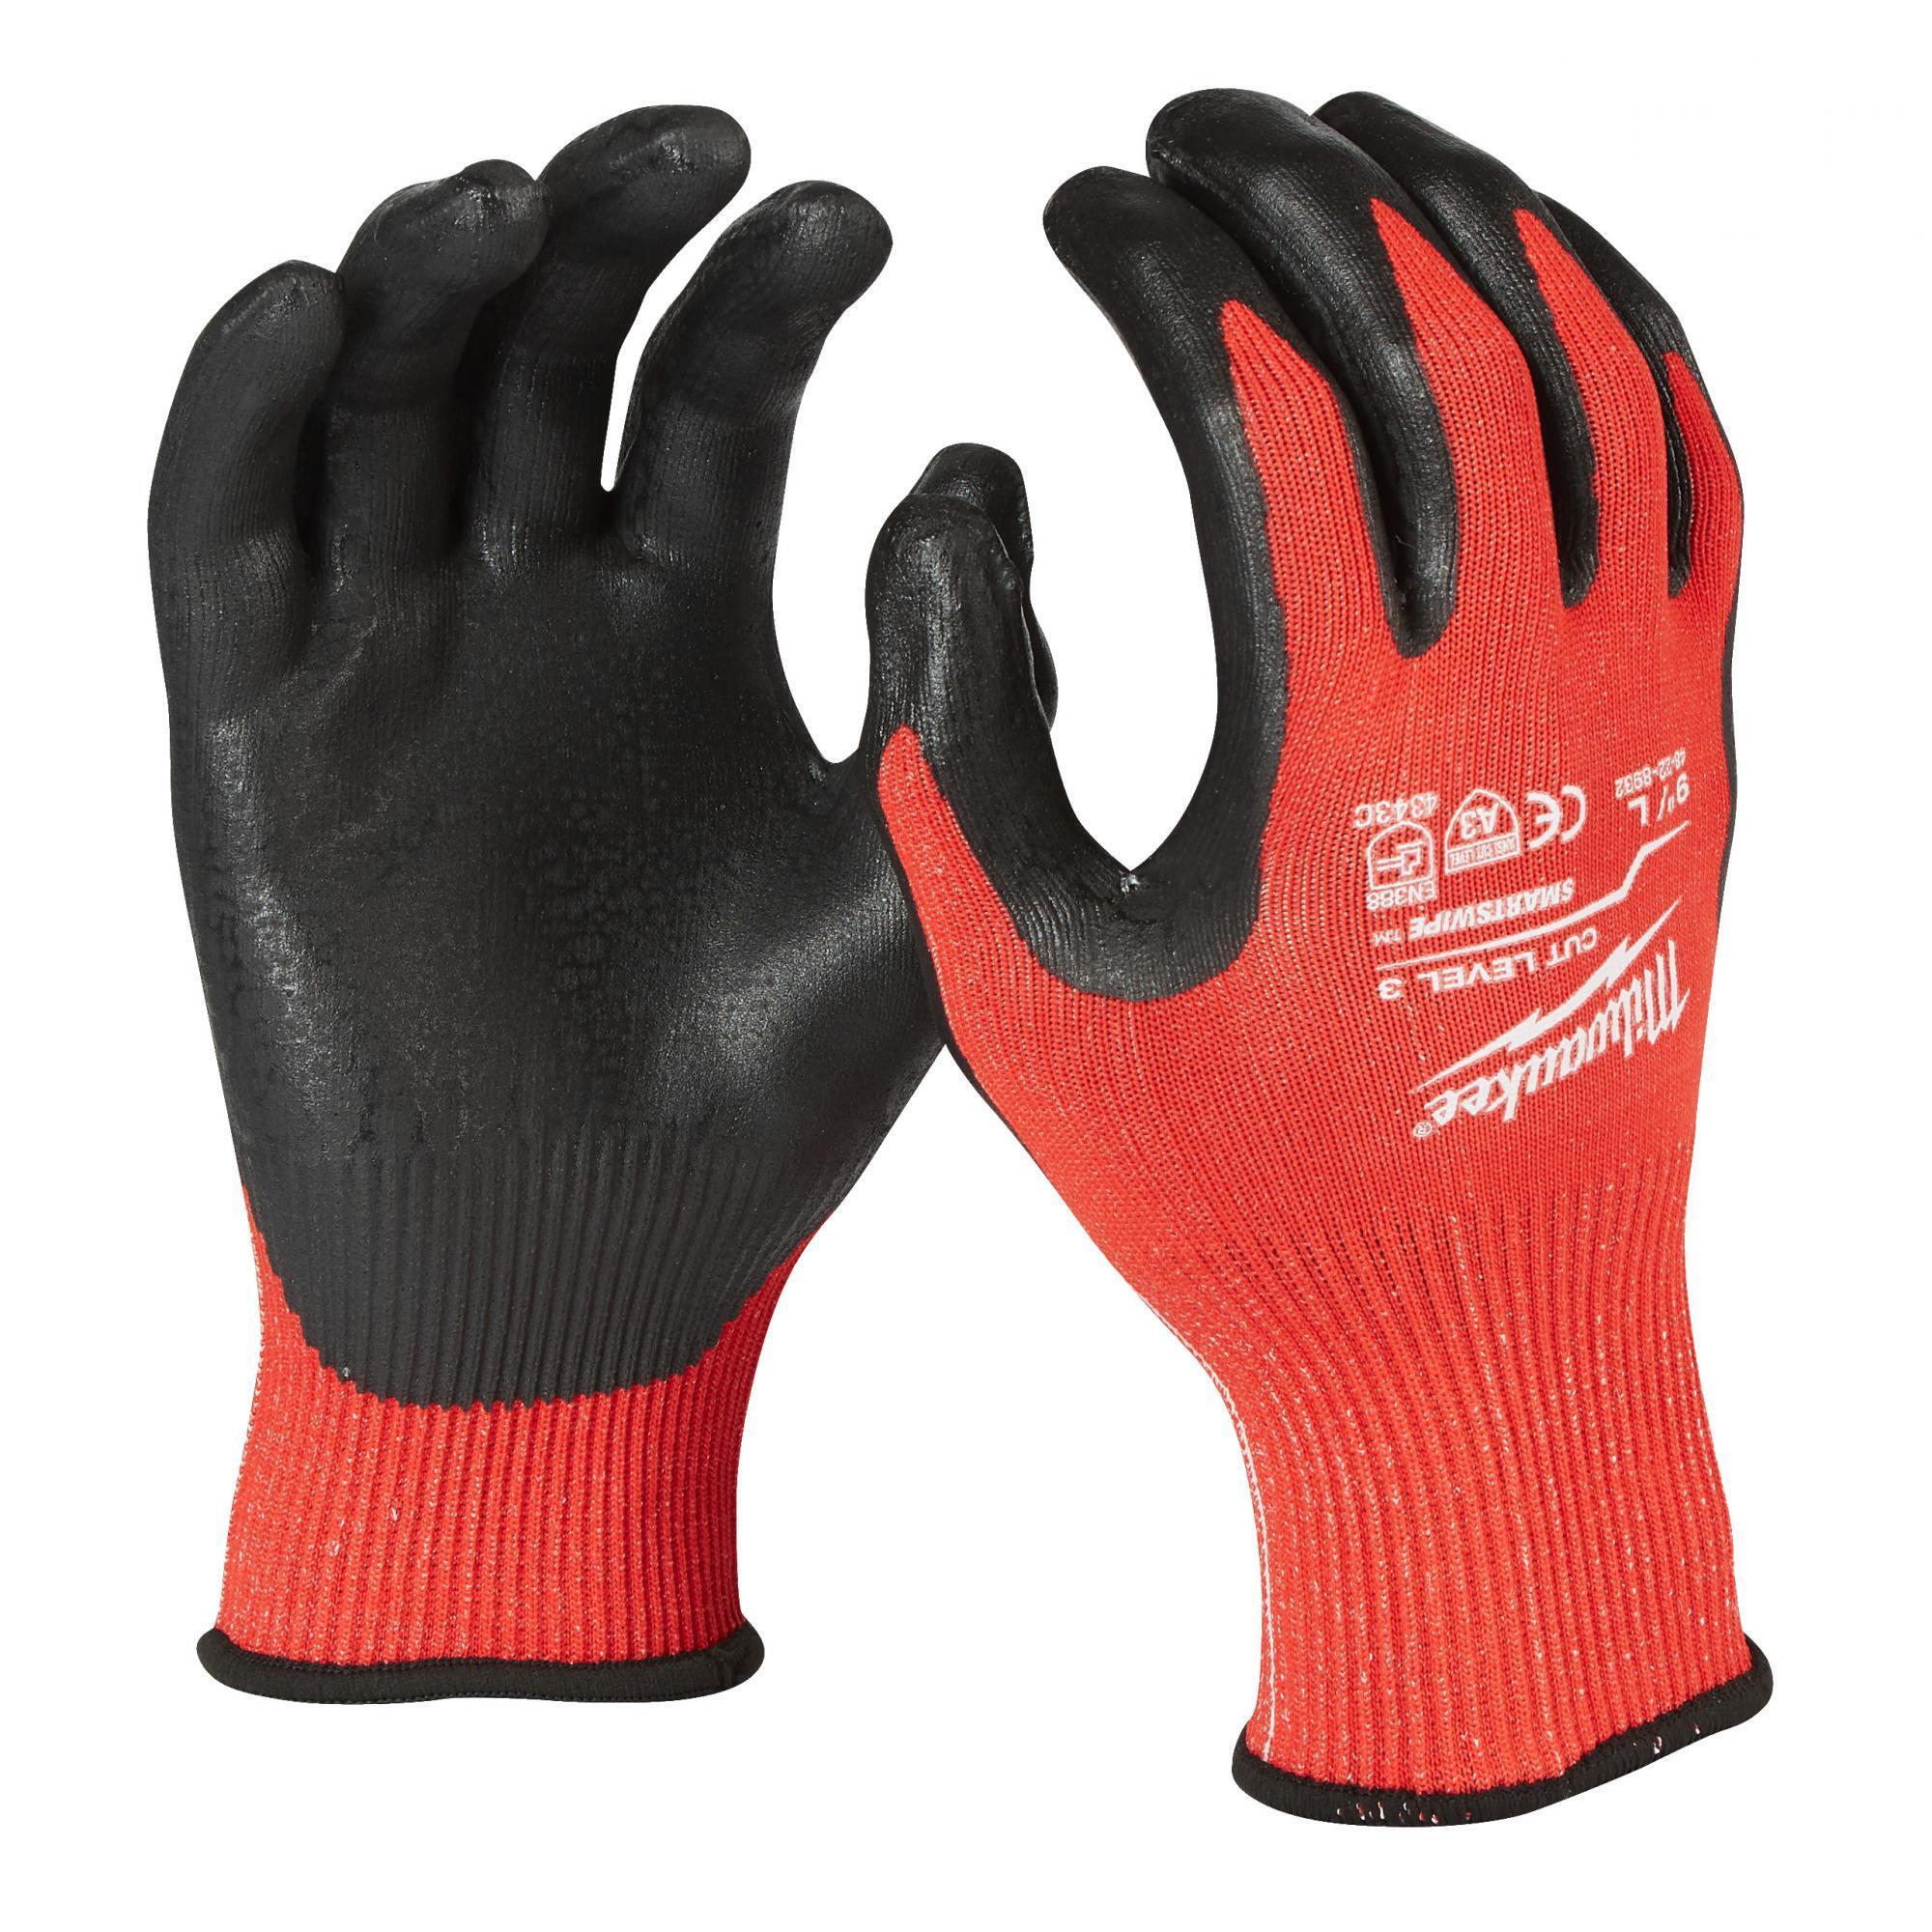 Перчатки защитные Milwaukee Cut Level 3/C, размер L/9, 4932471619, 1 пара защитные перчатки milwaukee